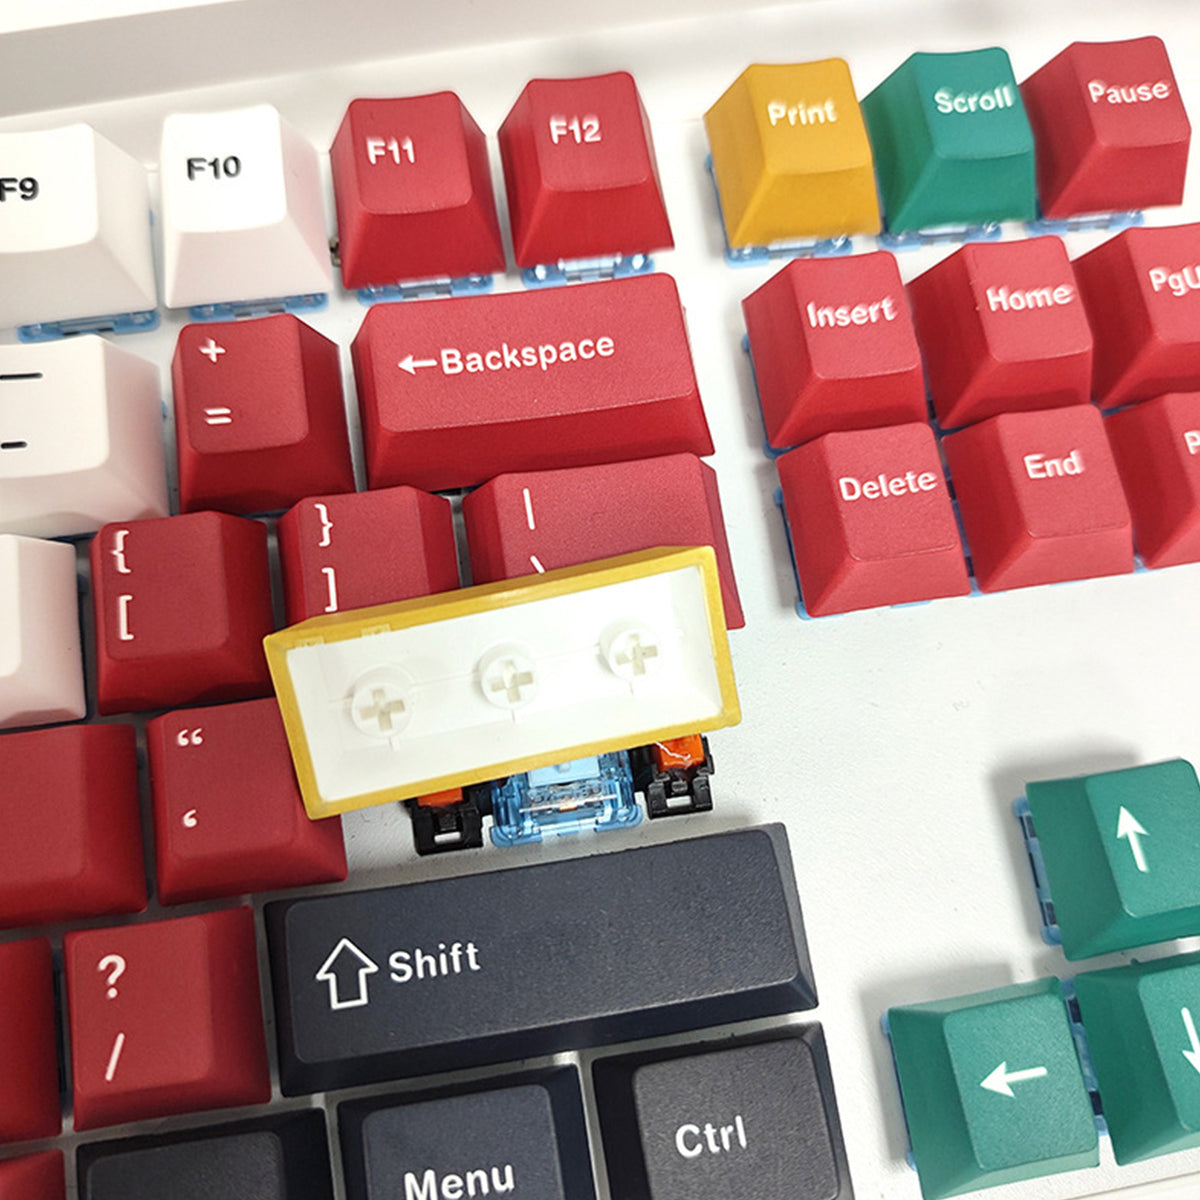 Retro Cherry Profile Dye-Sub PBT Keycap Set - Mixed Color - KeyCapUS